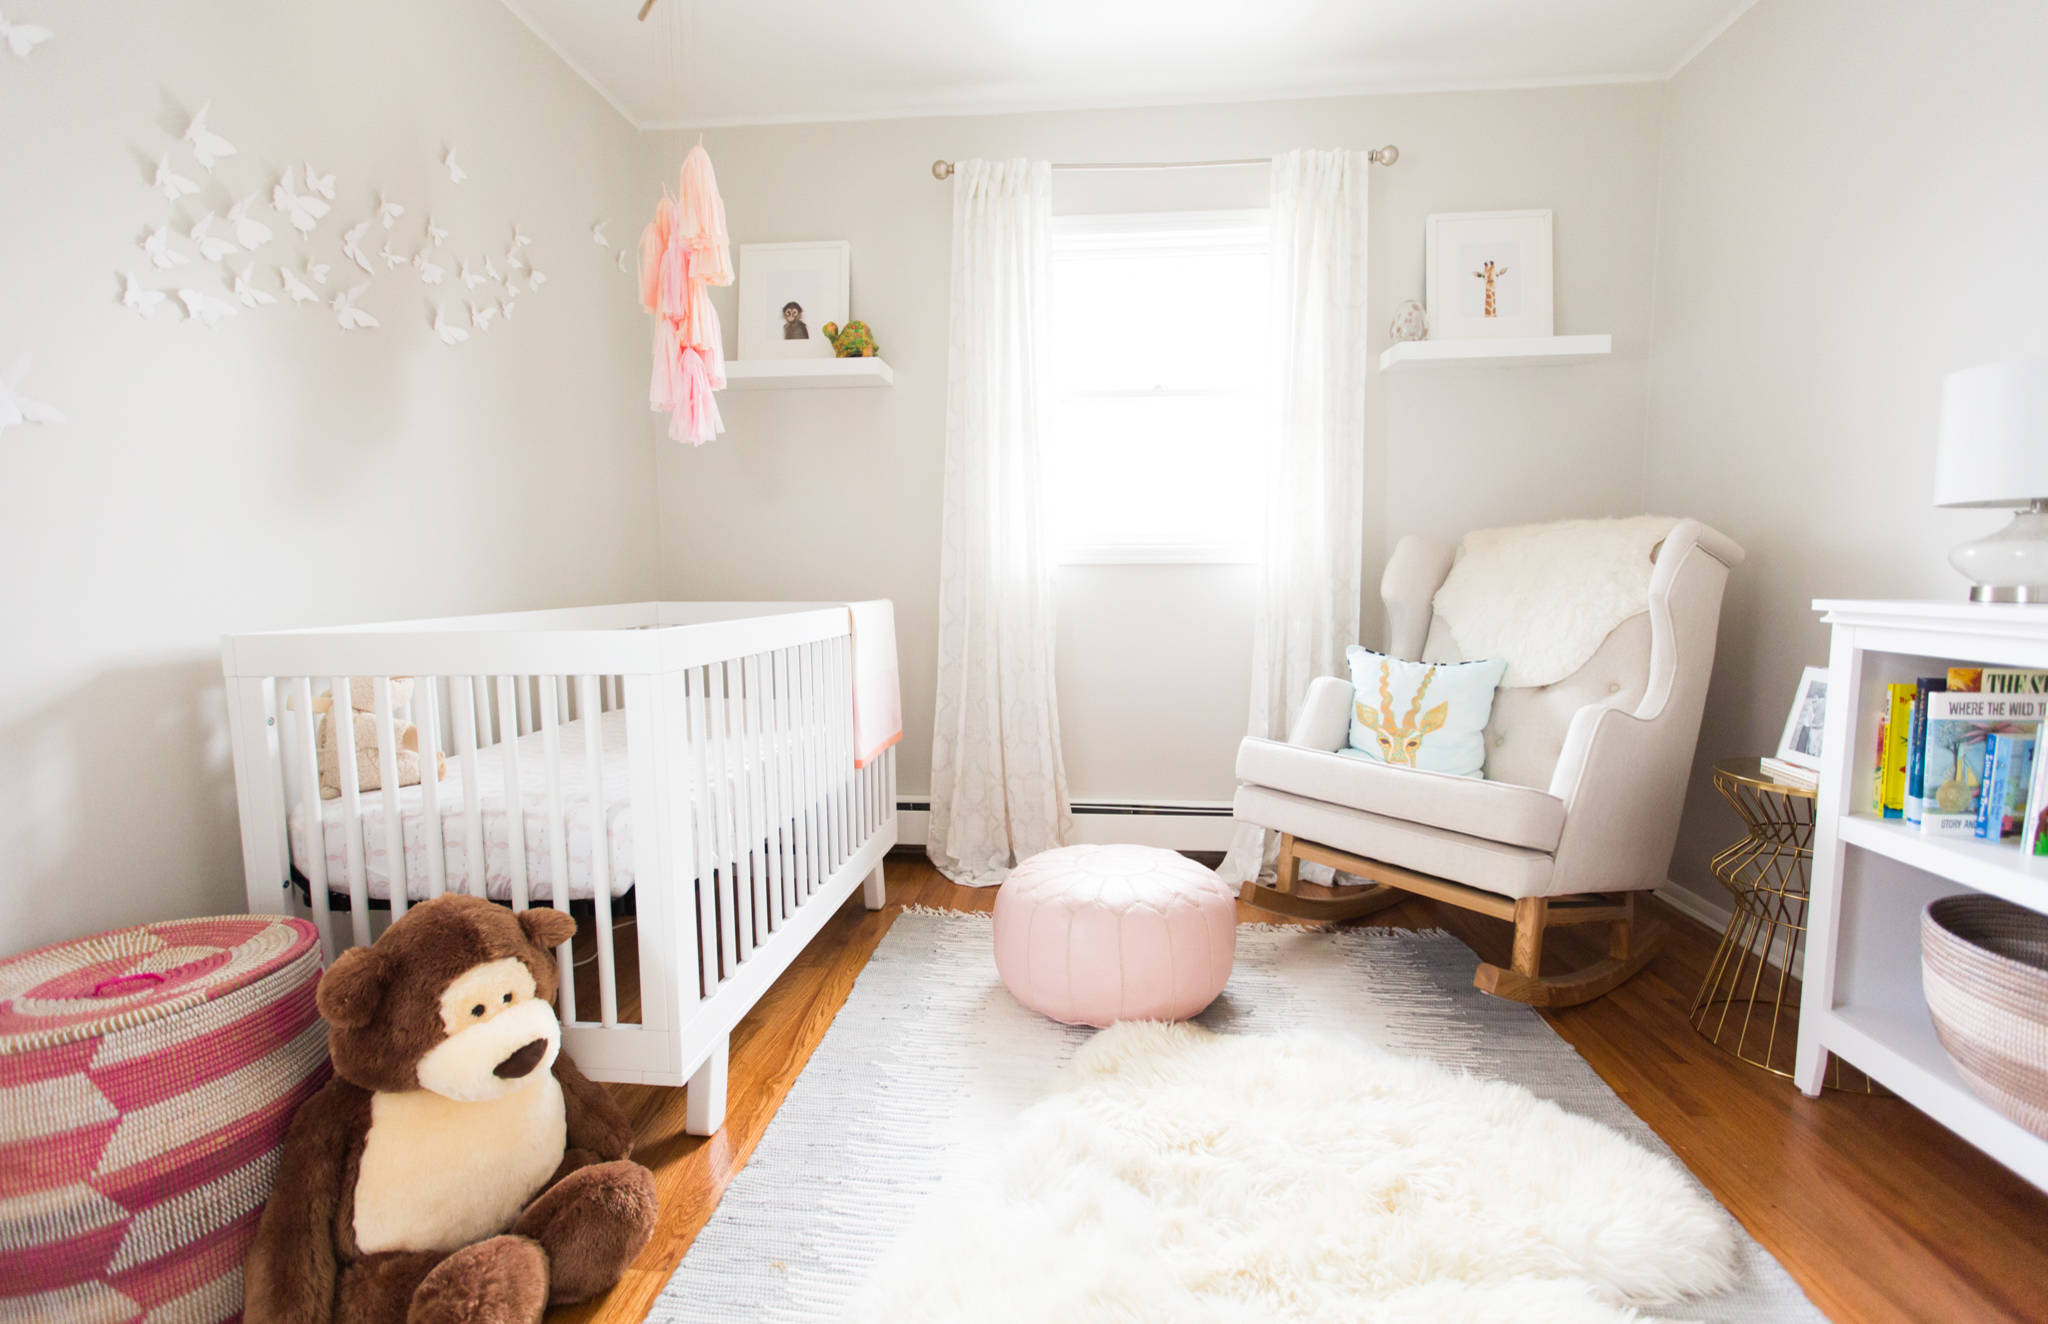 baby girl nursery room ideas